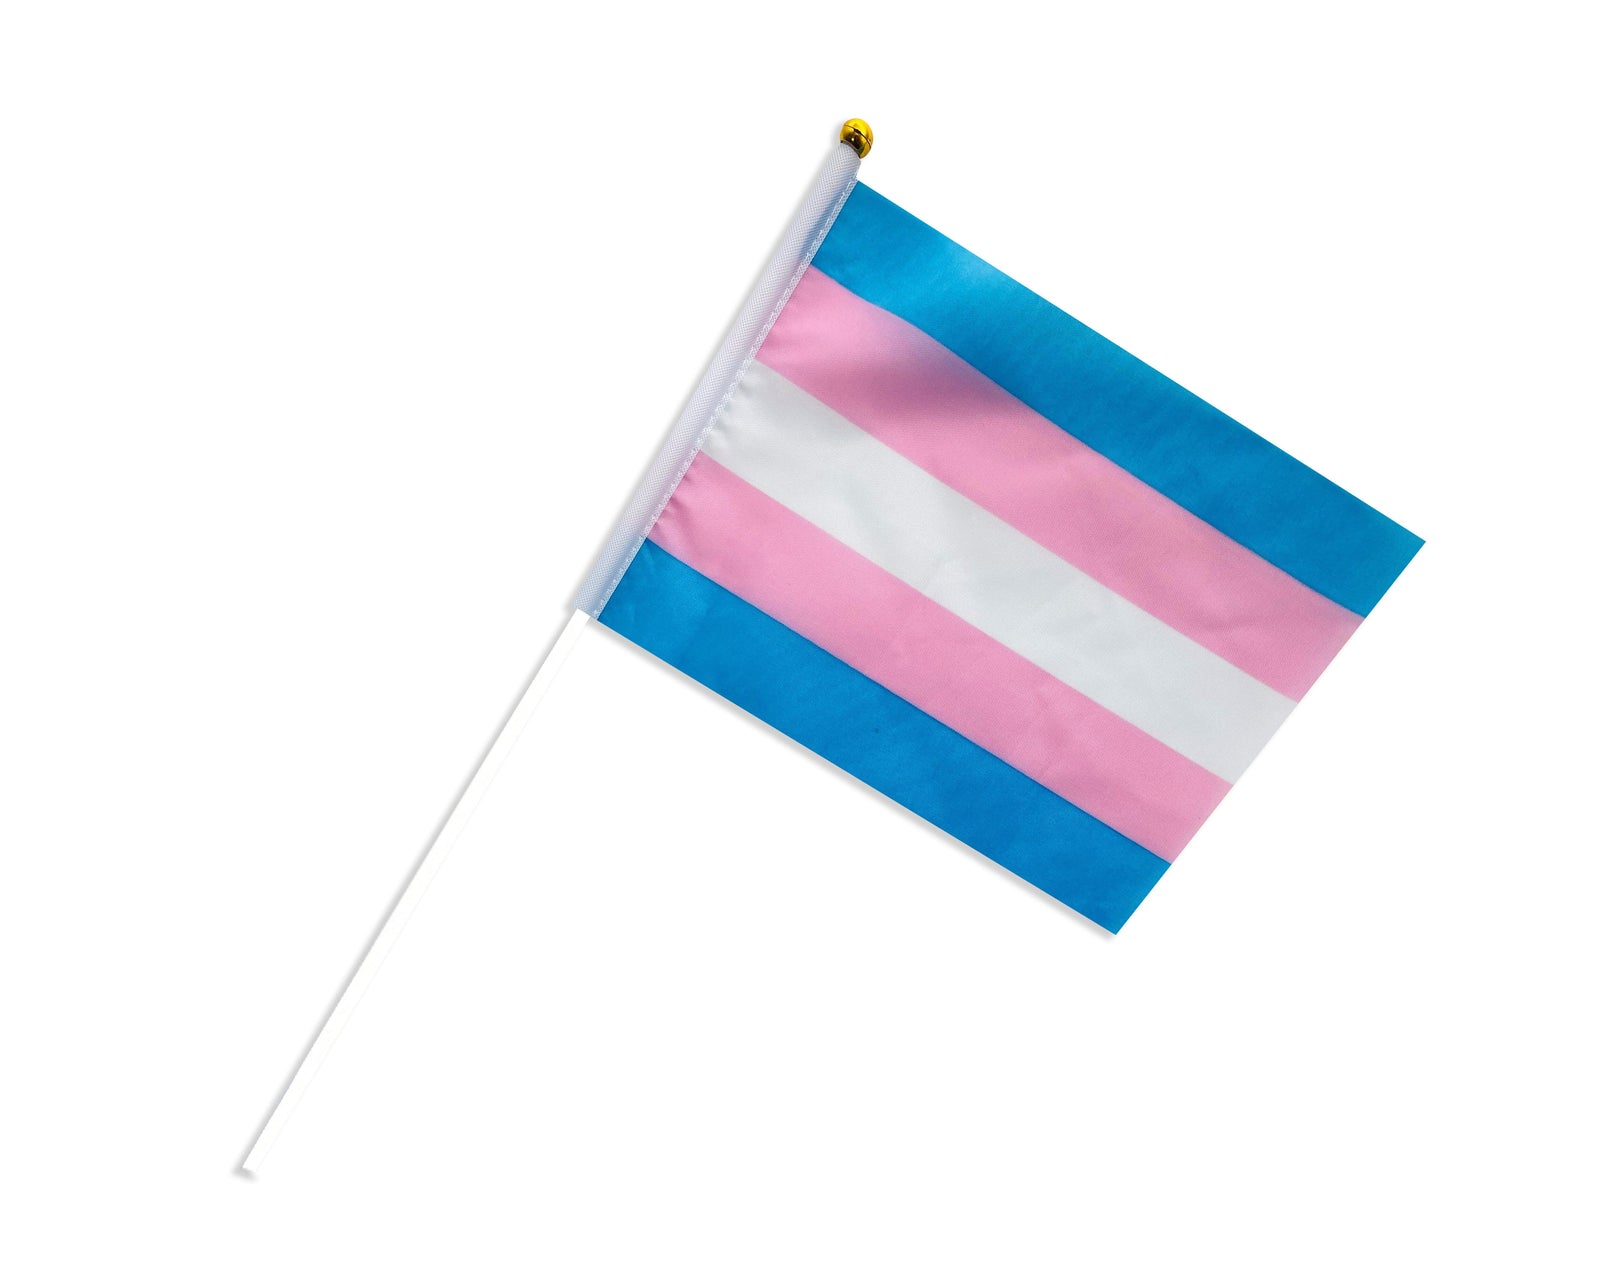 Buy Gay Pride Flags | LGBTQ Flags for Pride Parades